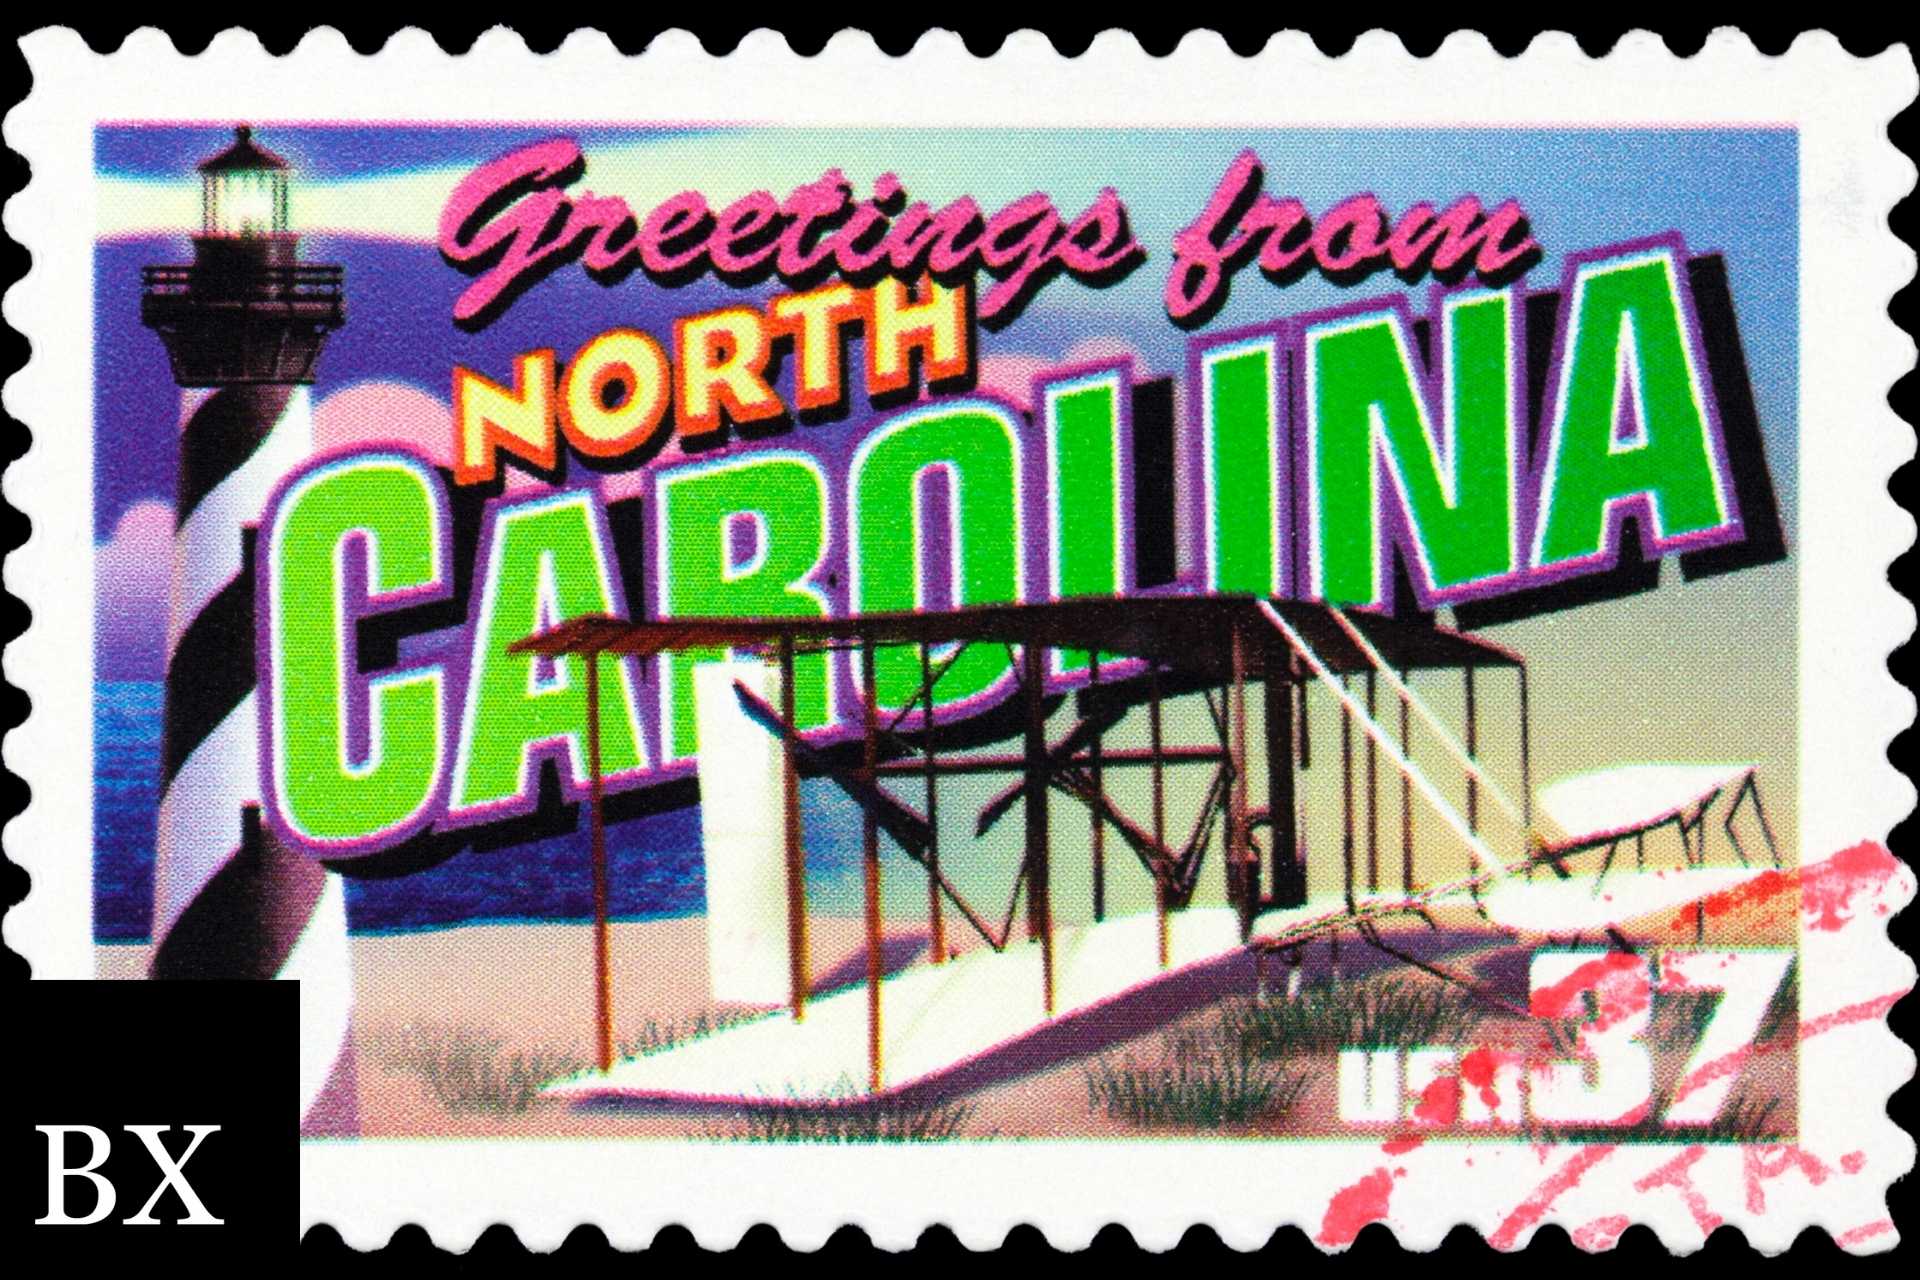 North Carolina Irrigation Contractor Bond